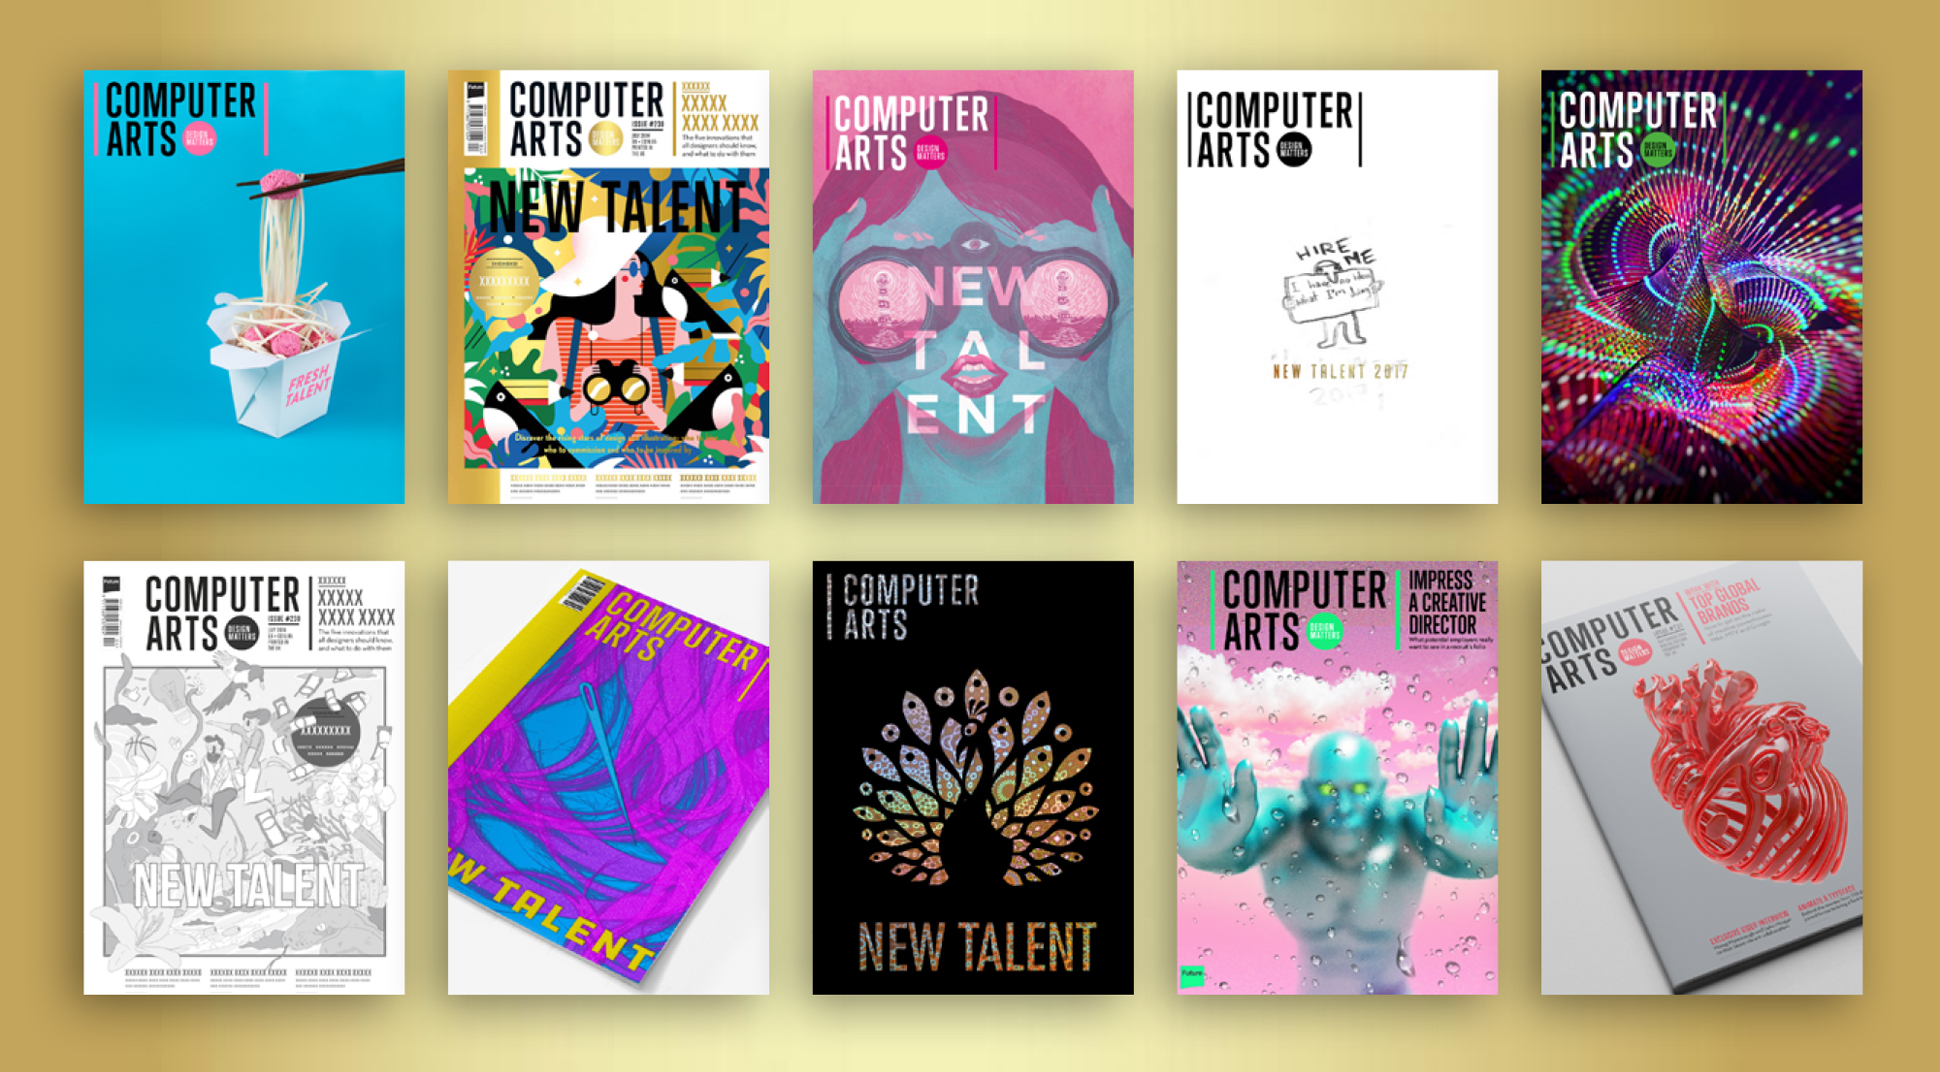 Computer Arts cover design contest 2017: Top 10 revealed! | Creative Bloq